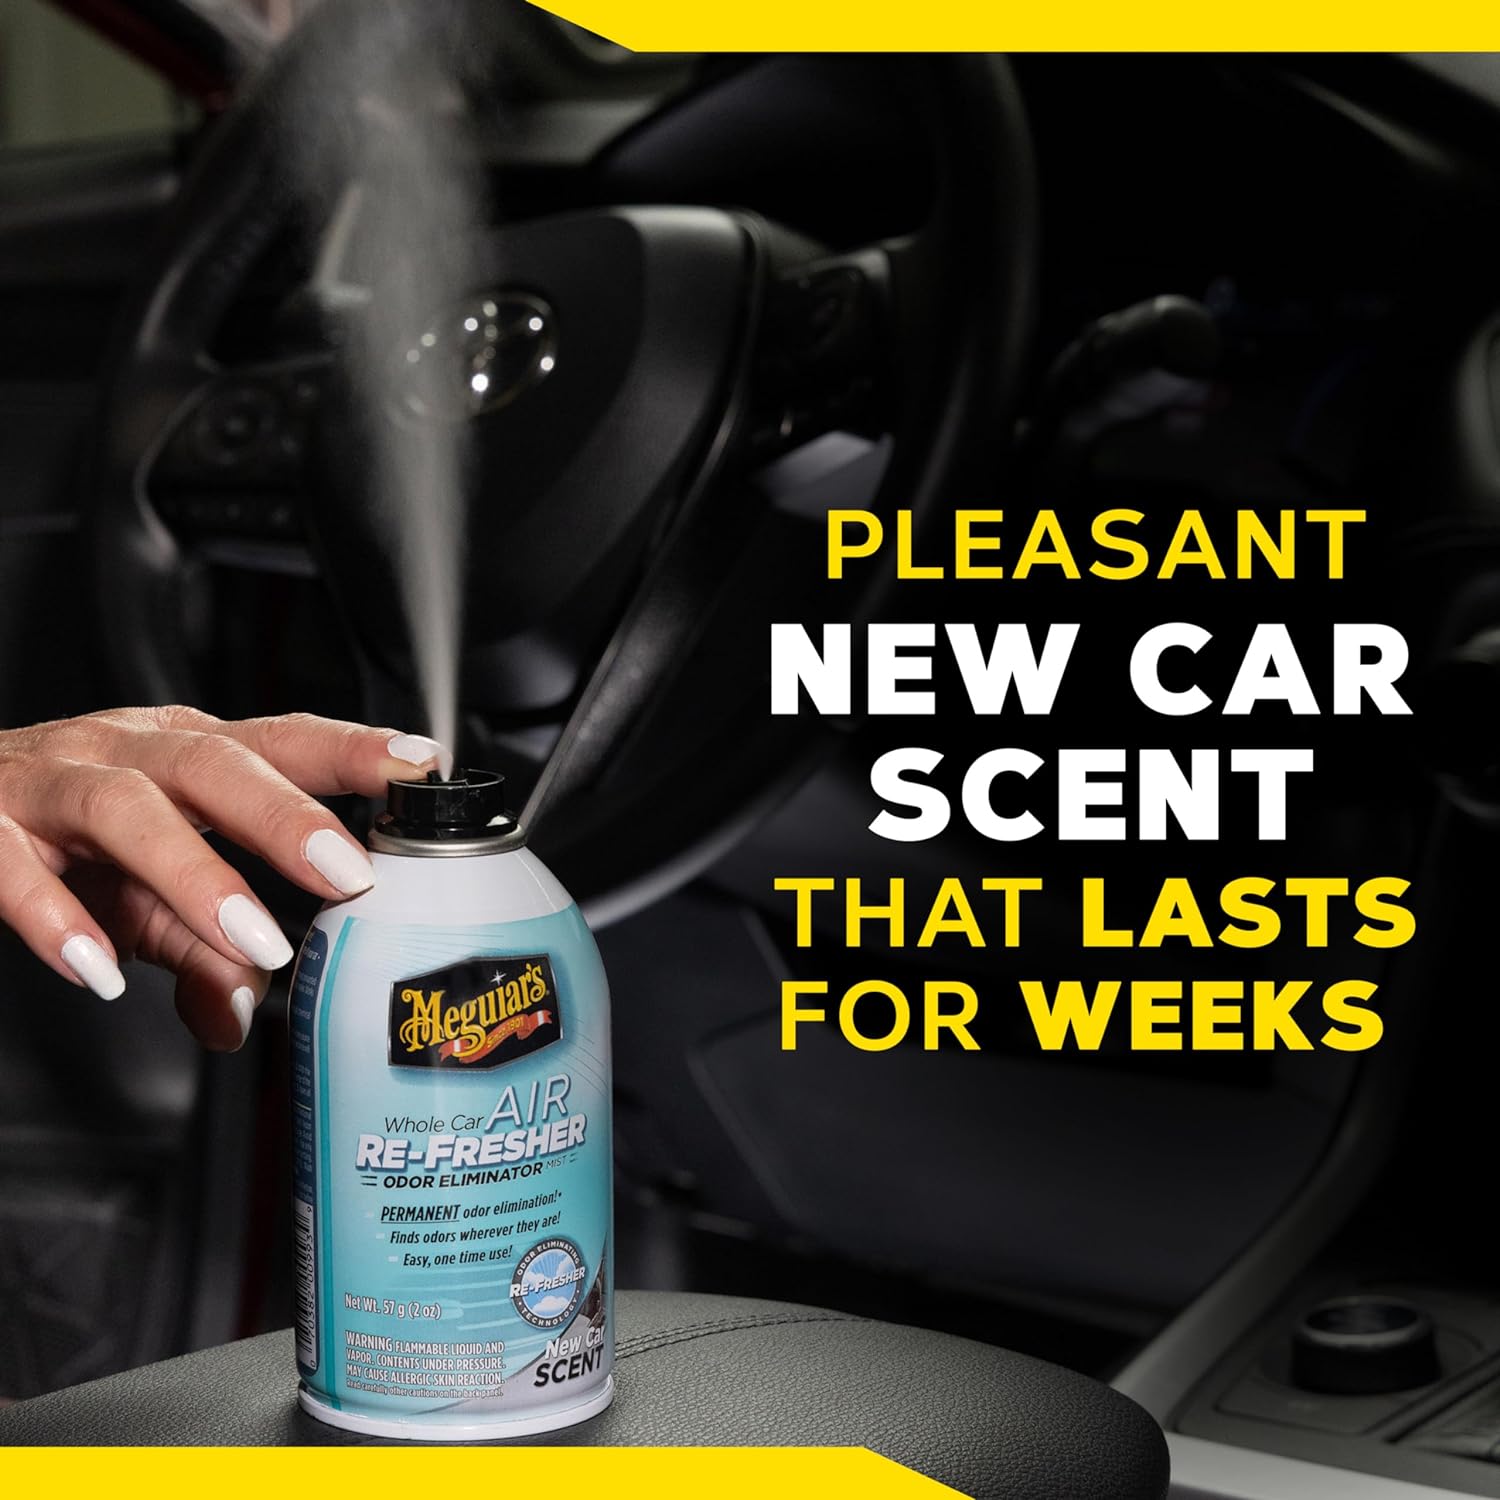 Meguiar's Whole Car Air Refresher, Odor Eliminator Spray Eliminates Strong Vehicle Odors, New Car Scent - 2 Oz Spray Bottle